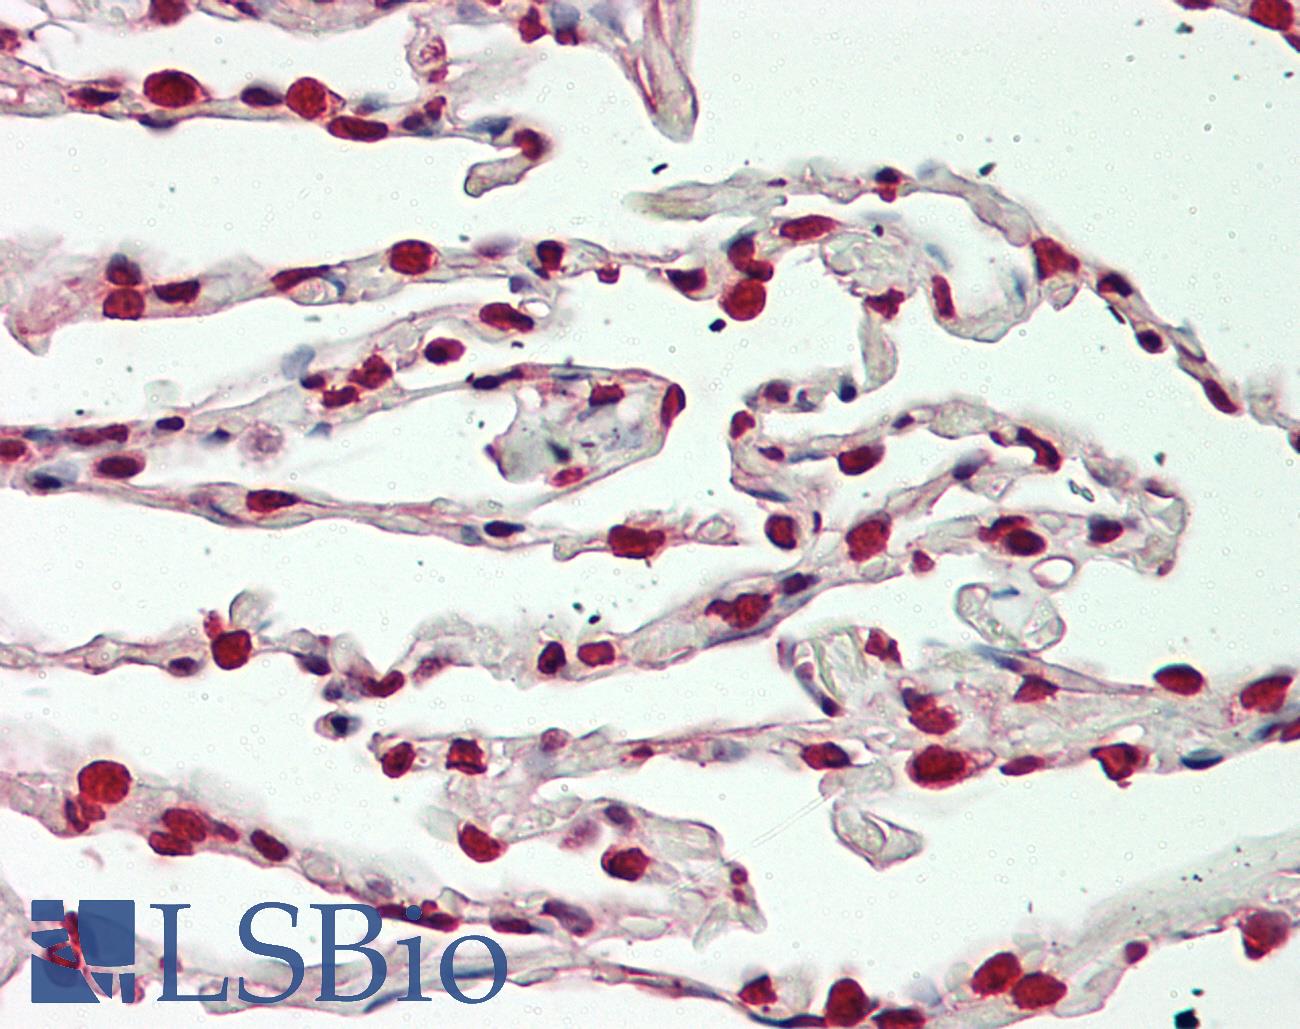 BTBD9 Antibody - Human Lung: Formalin-Fixed, Paraffin-Embedded (FFPE)